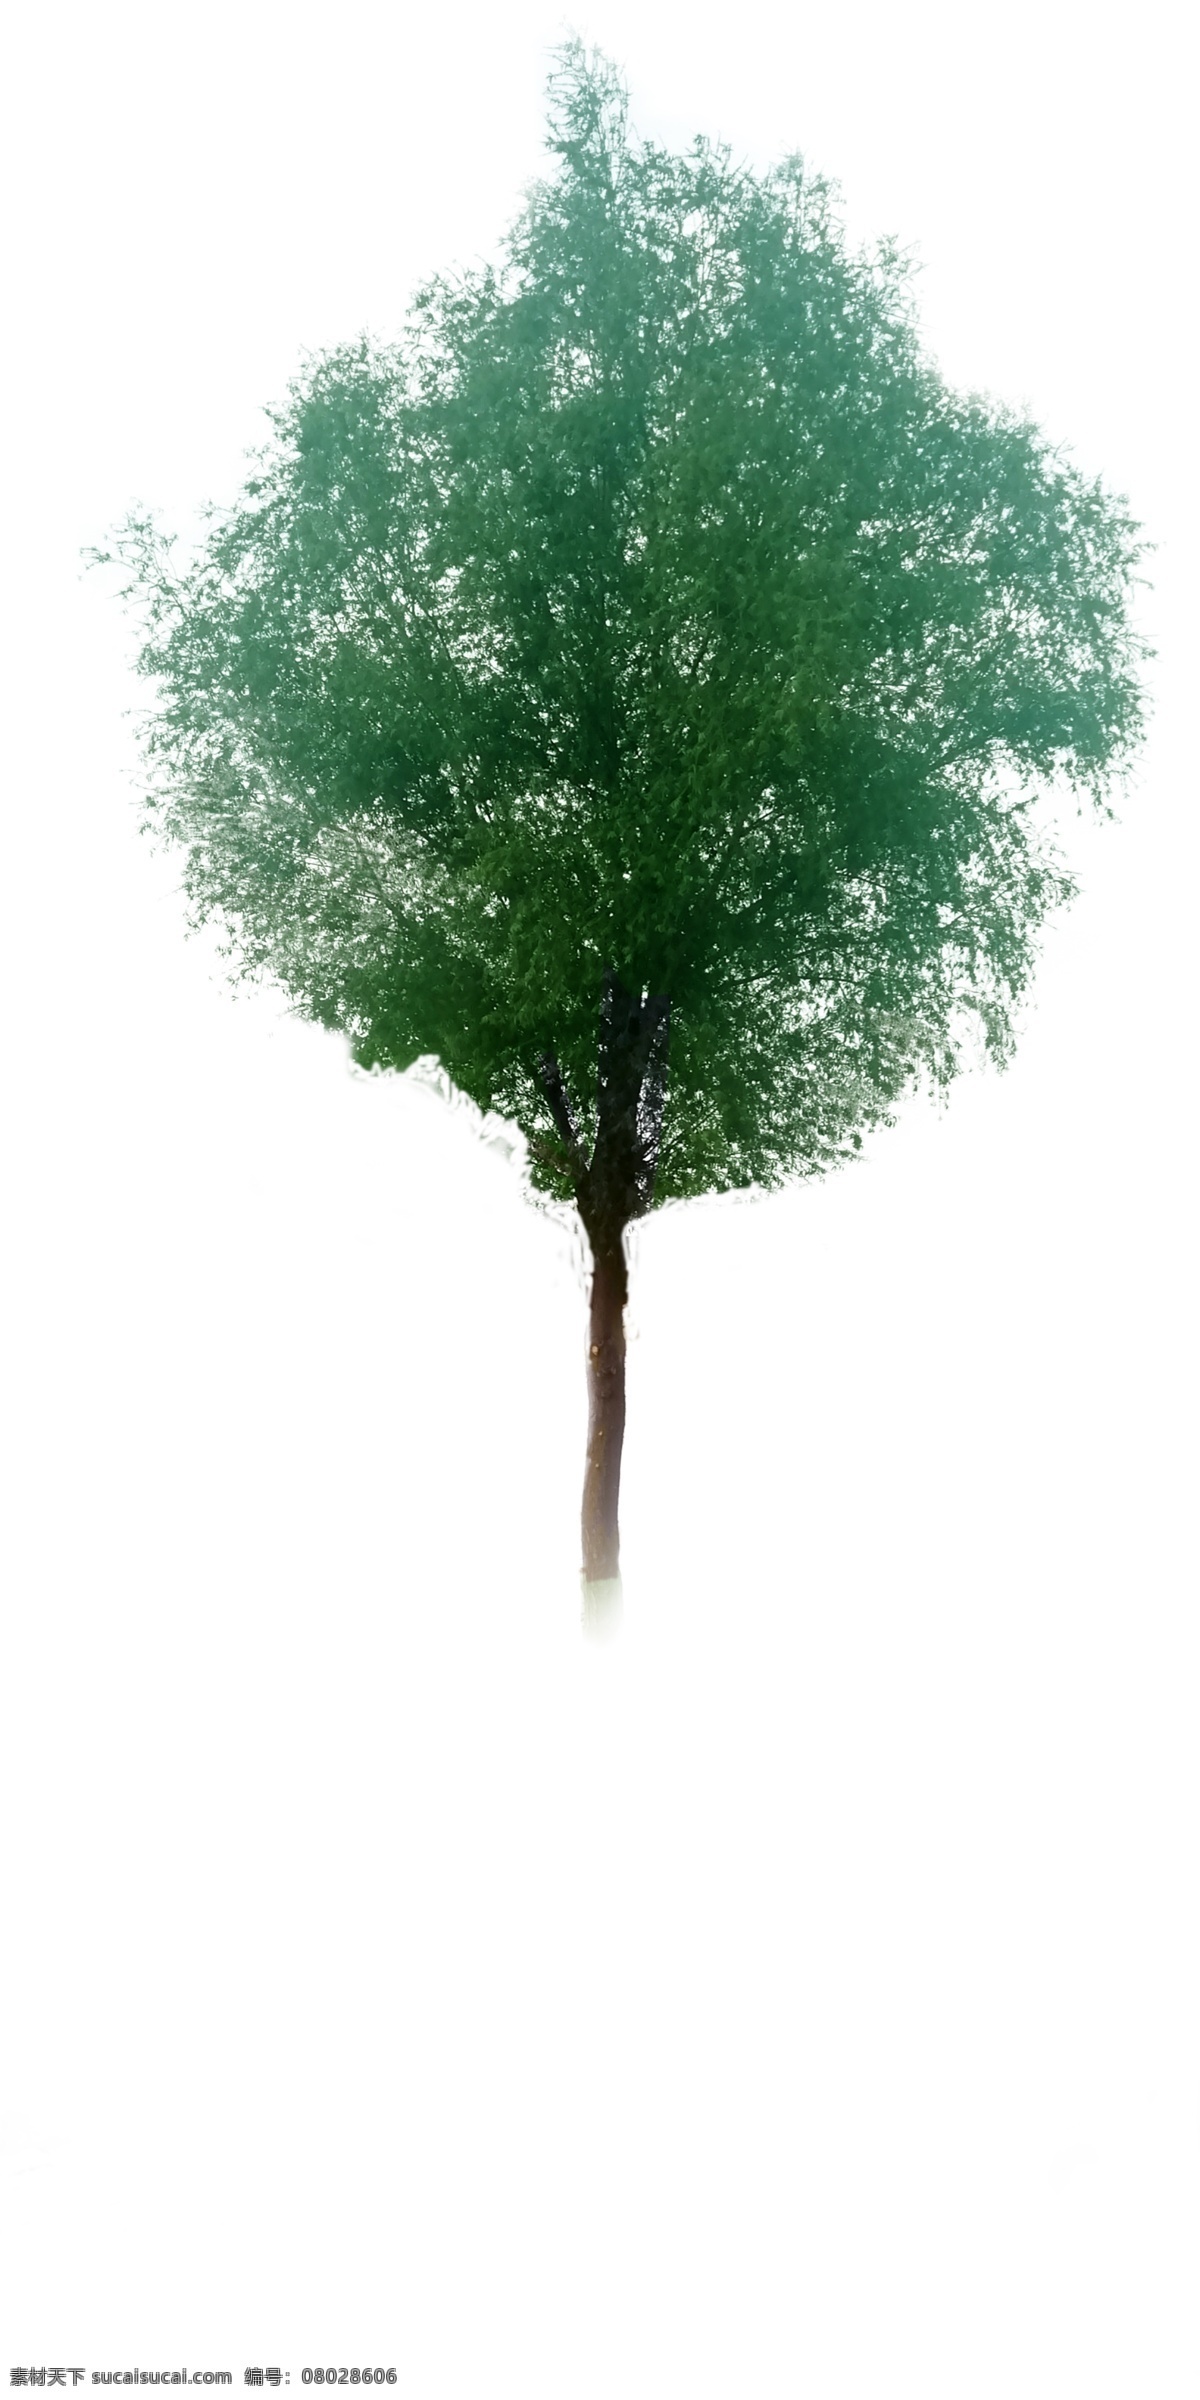 ps素材树 ps 抠图素材 单个树 建筑设计 园林景观 ps素材 环境设计